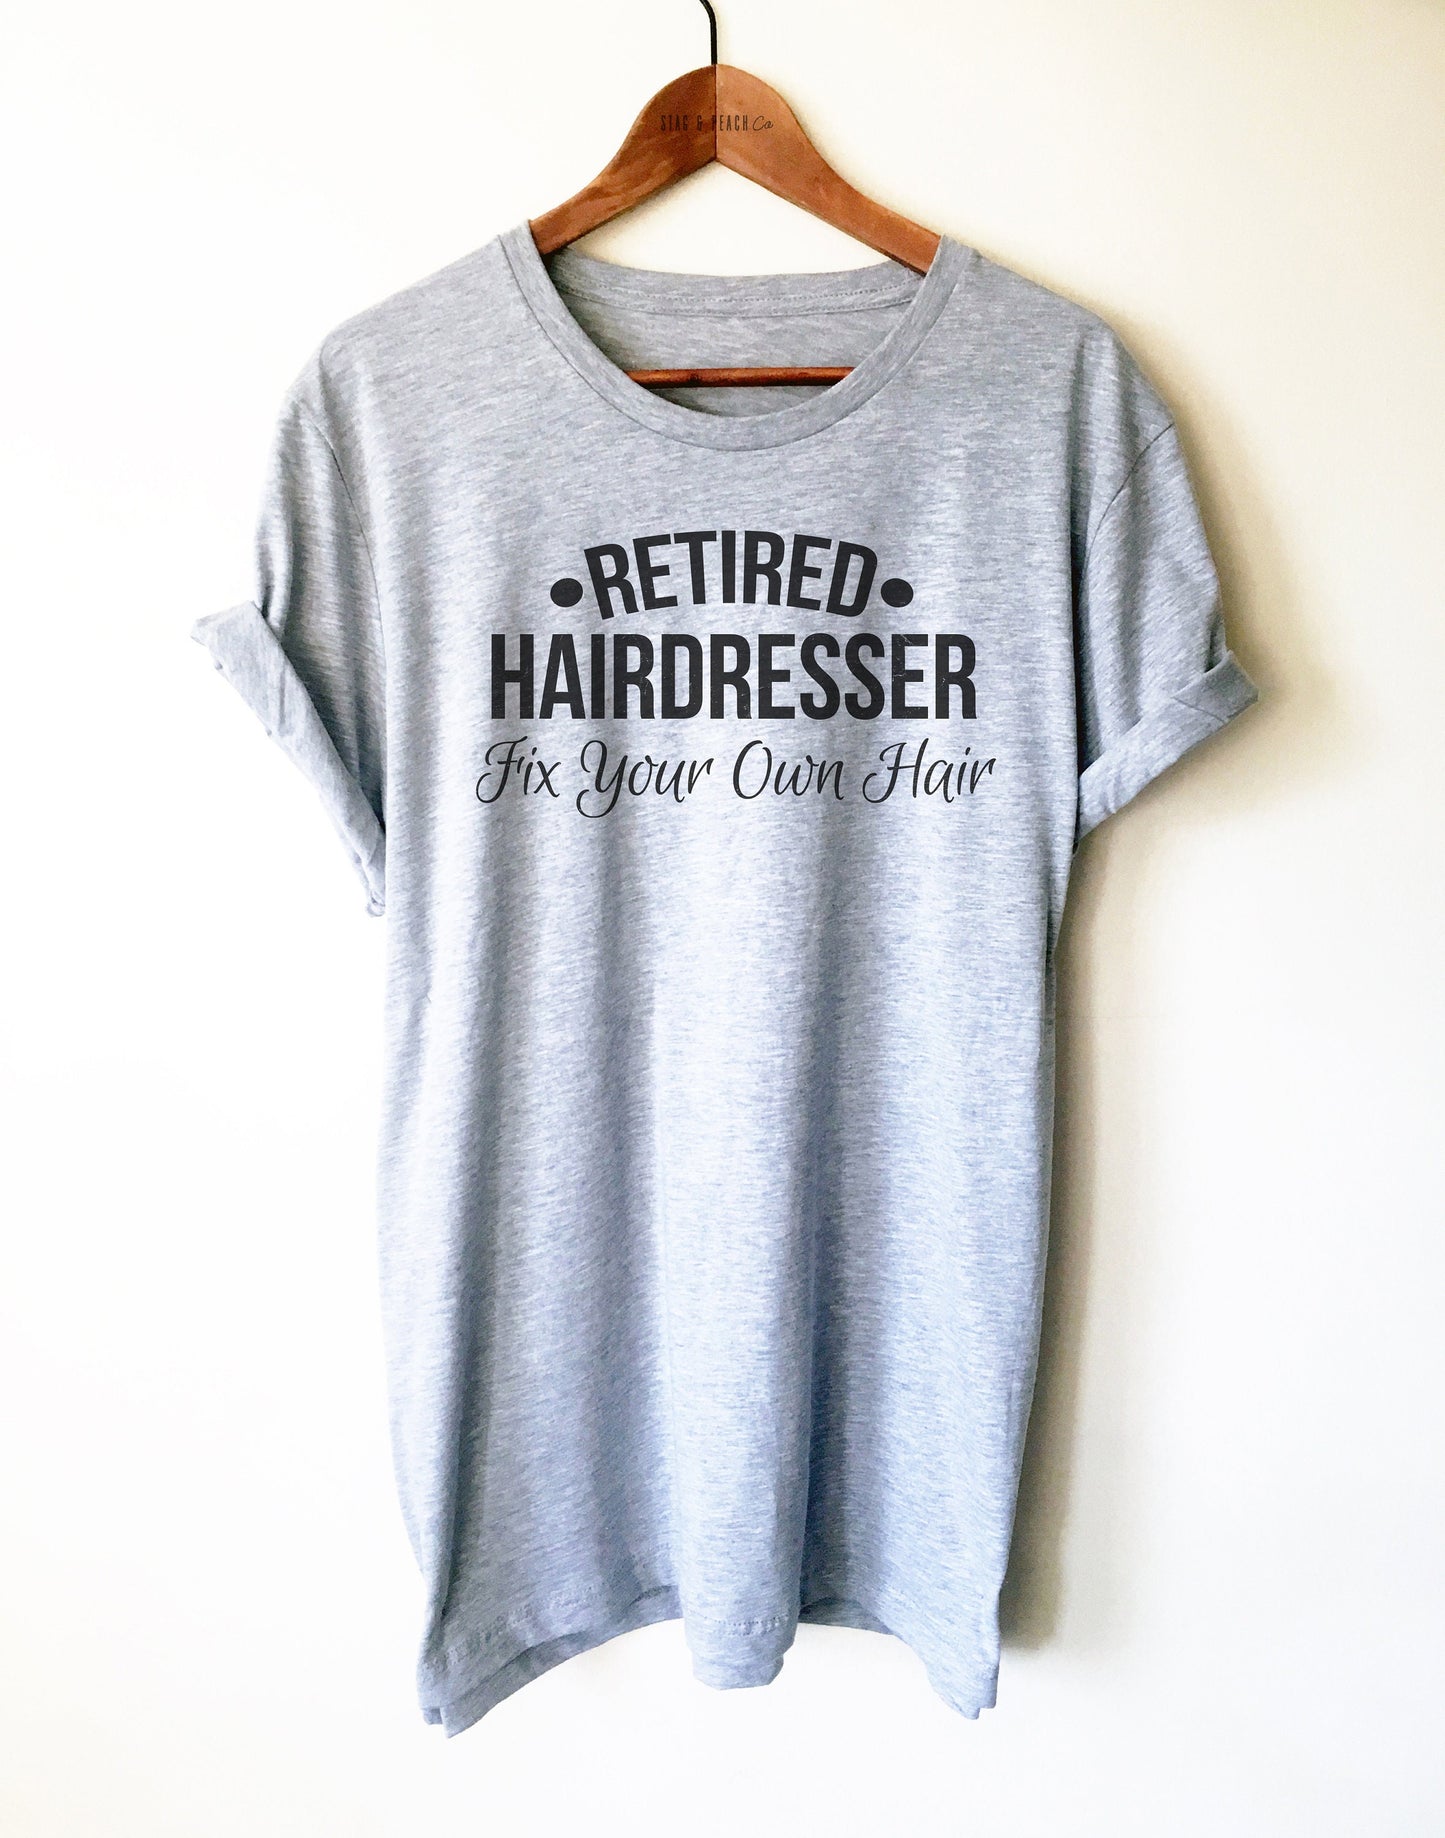 Hair Stylist Shirt / Tank Top / Hoodie - Hair Stylist Gift, Salon Shirts, Hairdresser Shirt, Hair Stylist Retirement, Retired Hairdresser